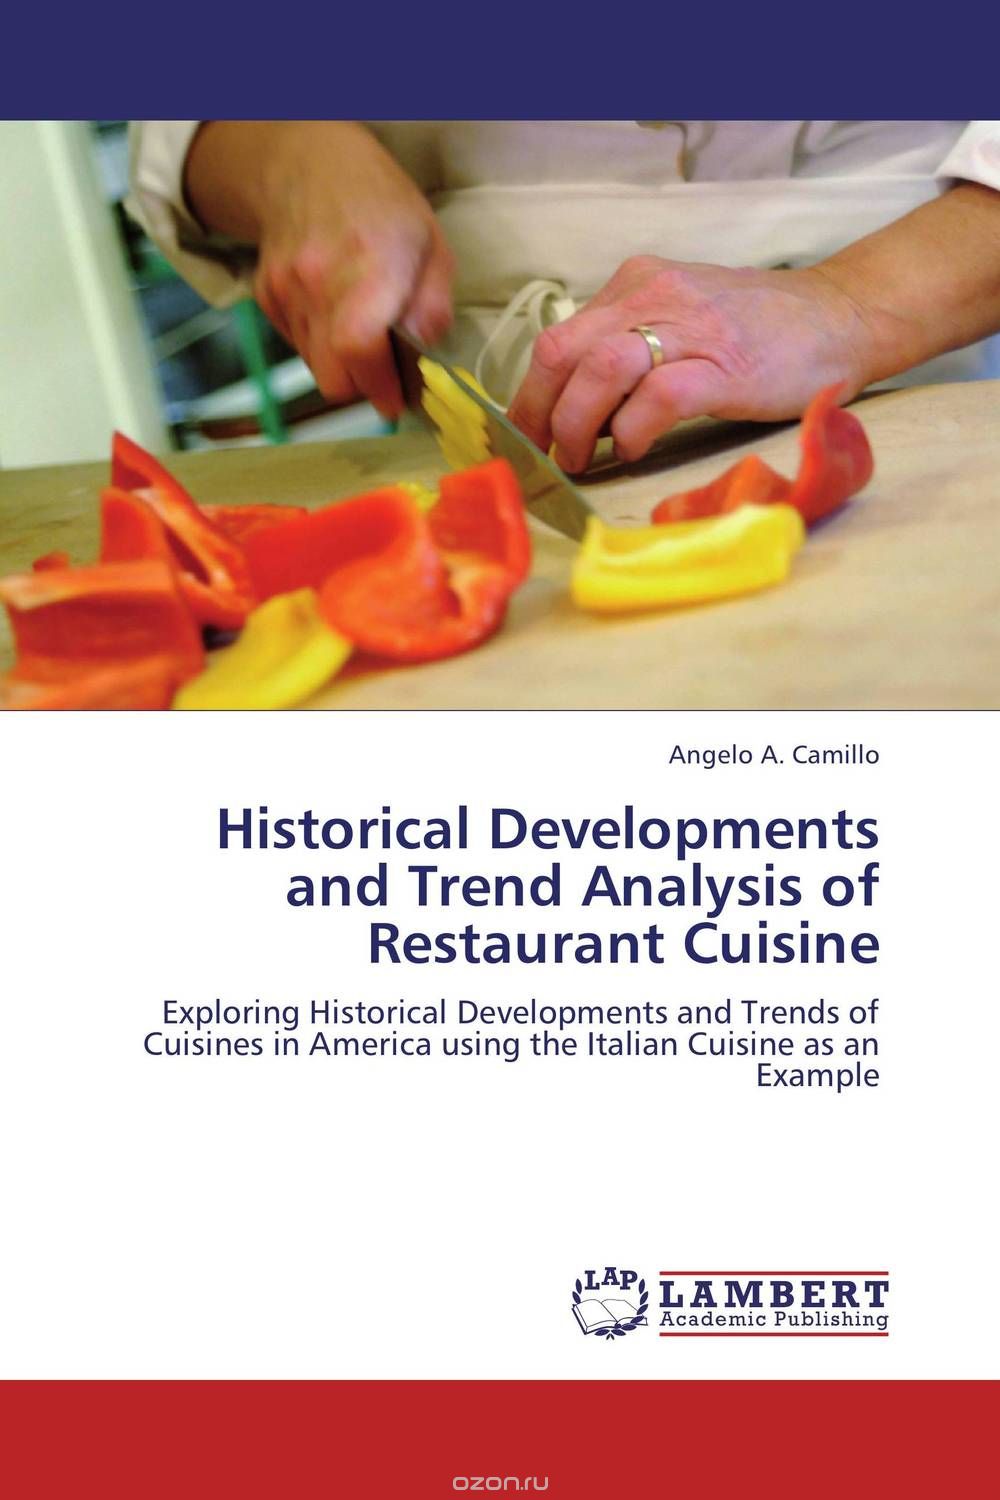 Скачать книгу "Historical Developments and Trend Analysis of Restaurant Cuisine"